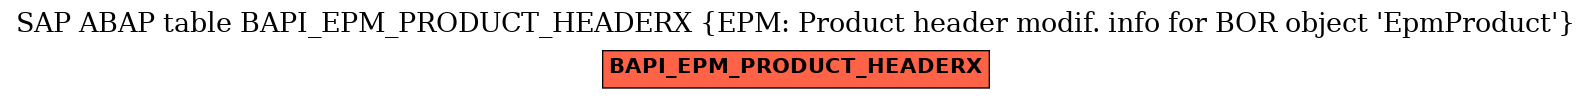 E-R Diagram for table BAPI_EPM_PRODUCT_HEADERX (EPM: Product header modif. info for BOR object 'EpmProduct')